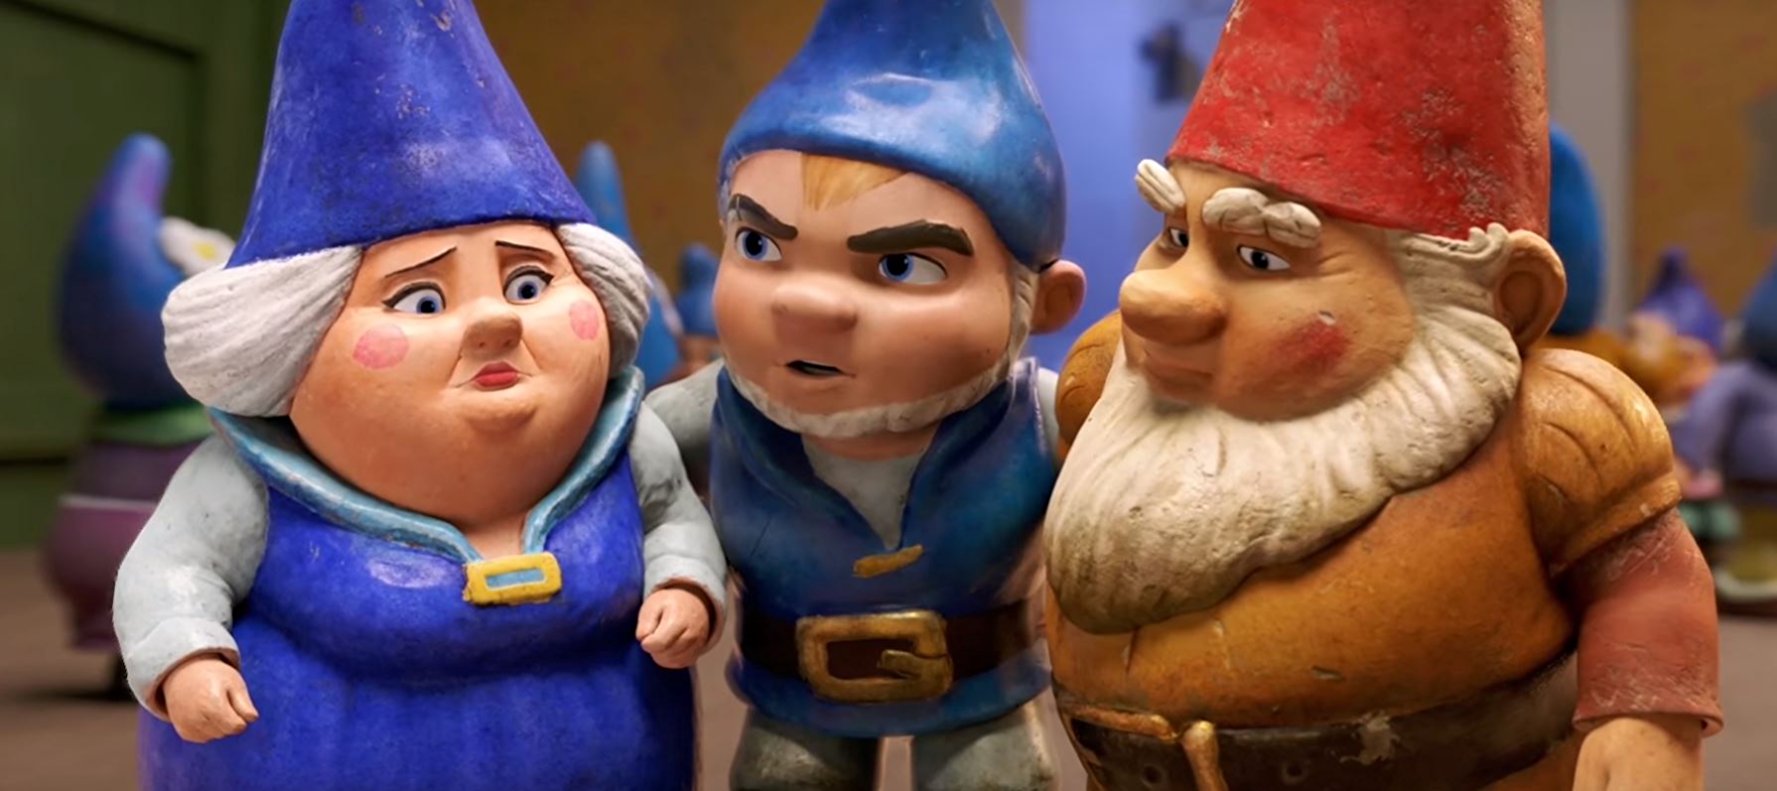 Bajkoranki: Gnomeo i Julia. Tajemnica zaginionych krasnali - dubbing